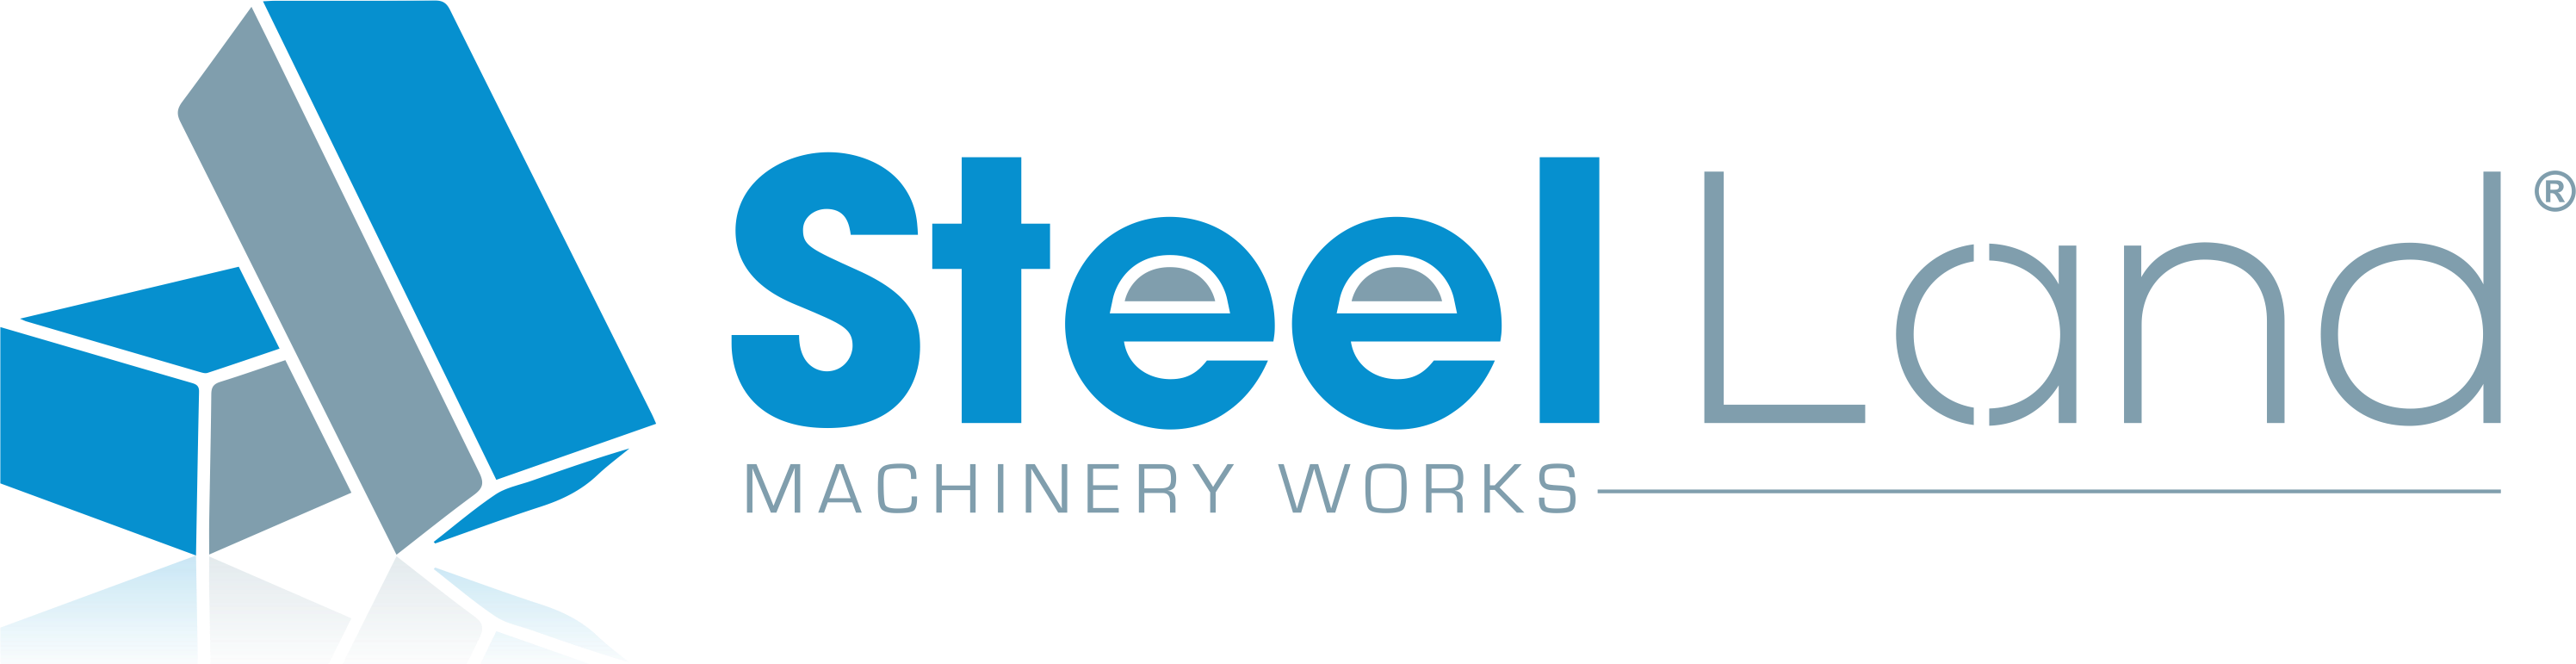 Steel Land Machinery Works Logo